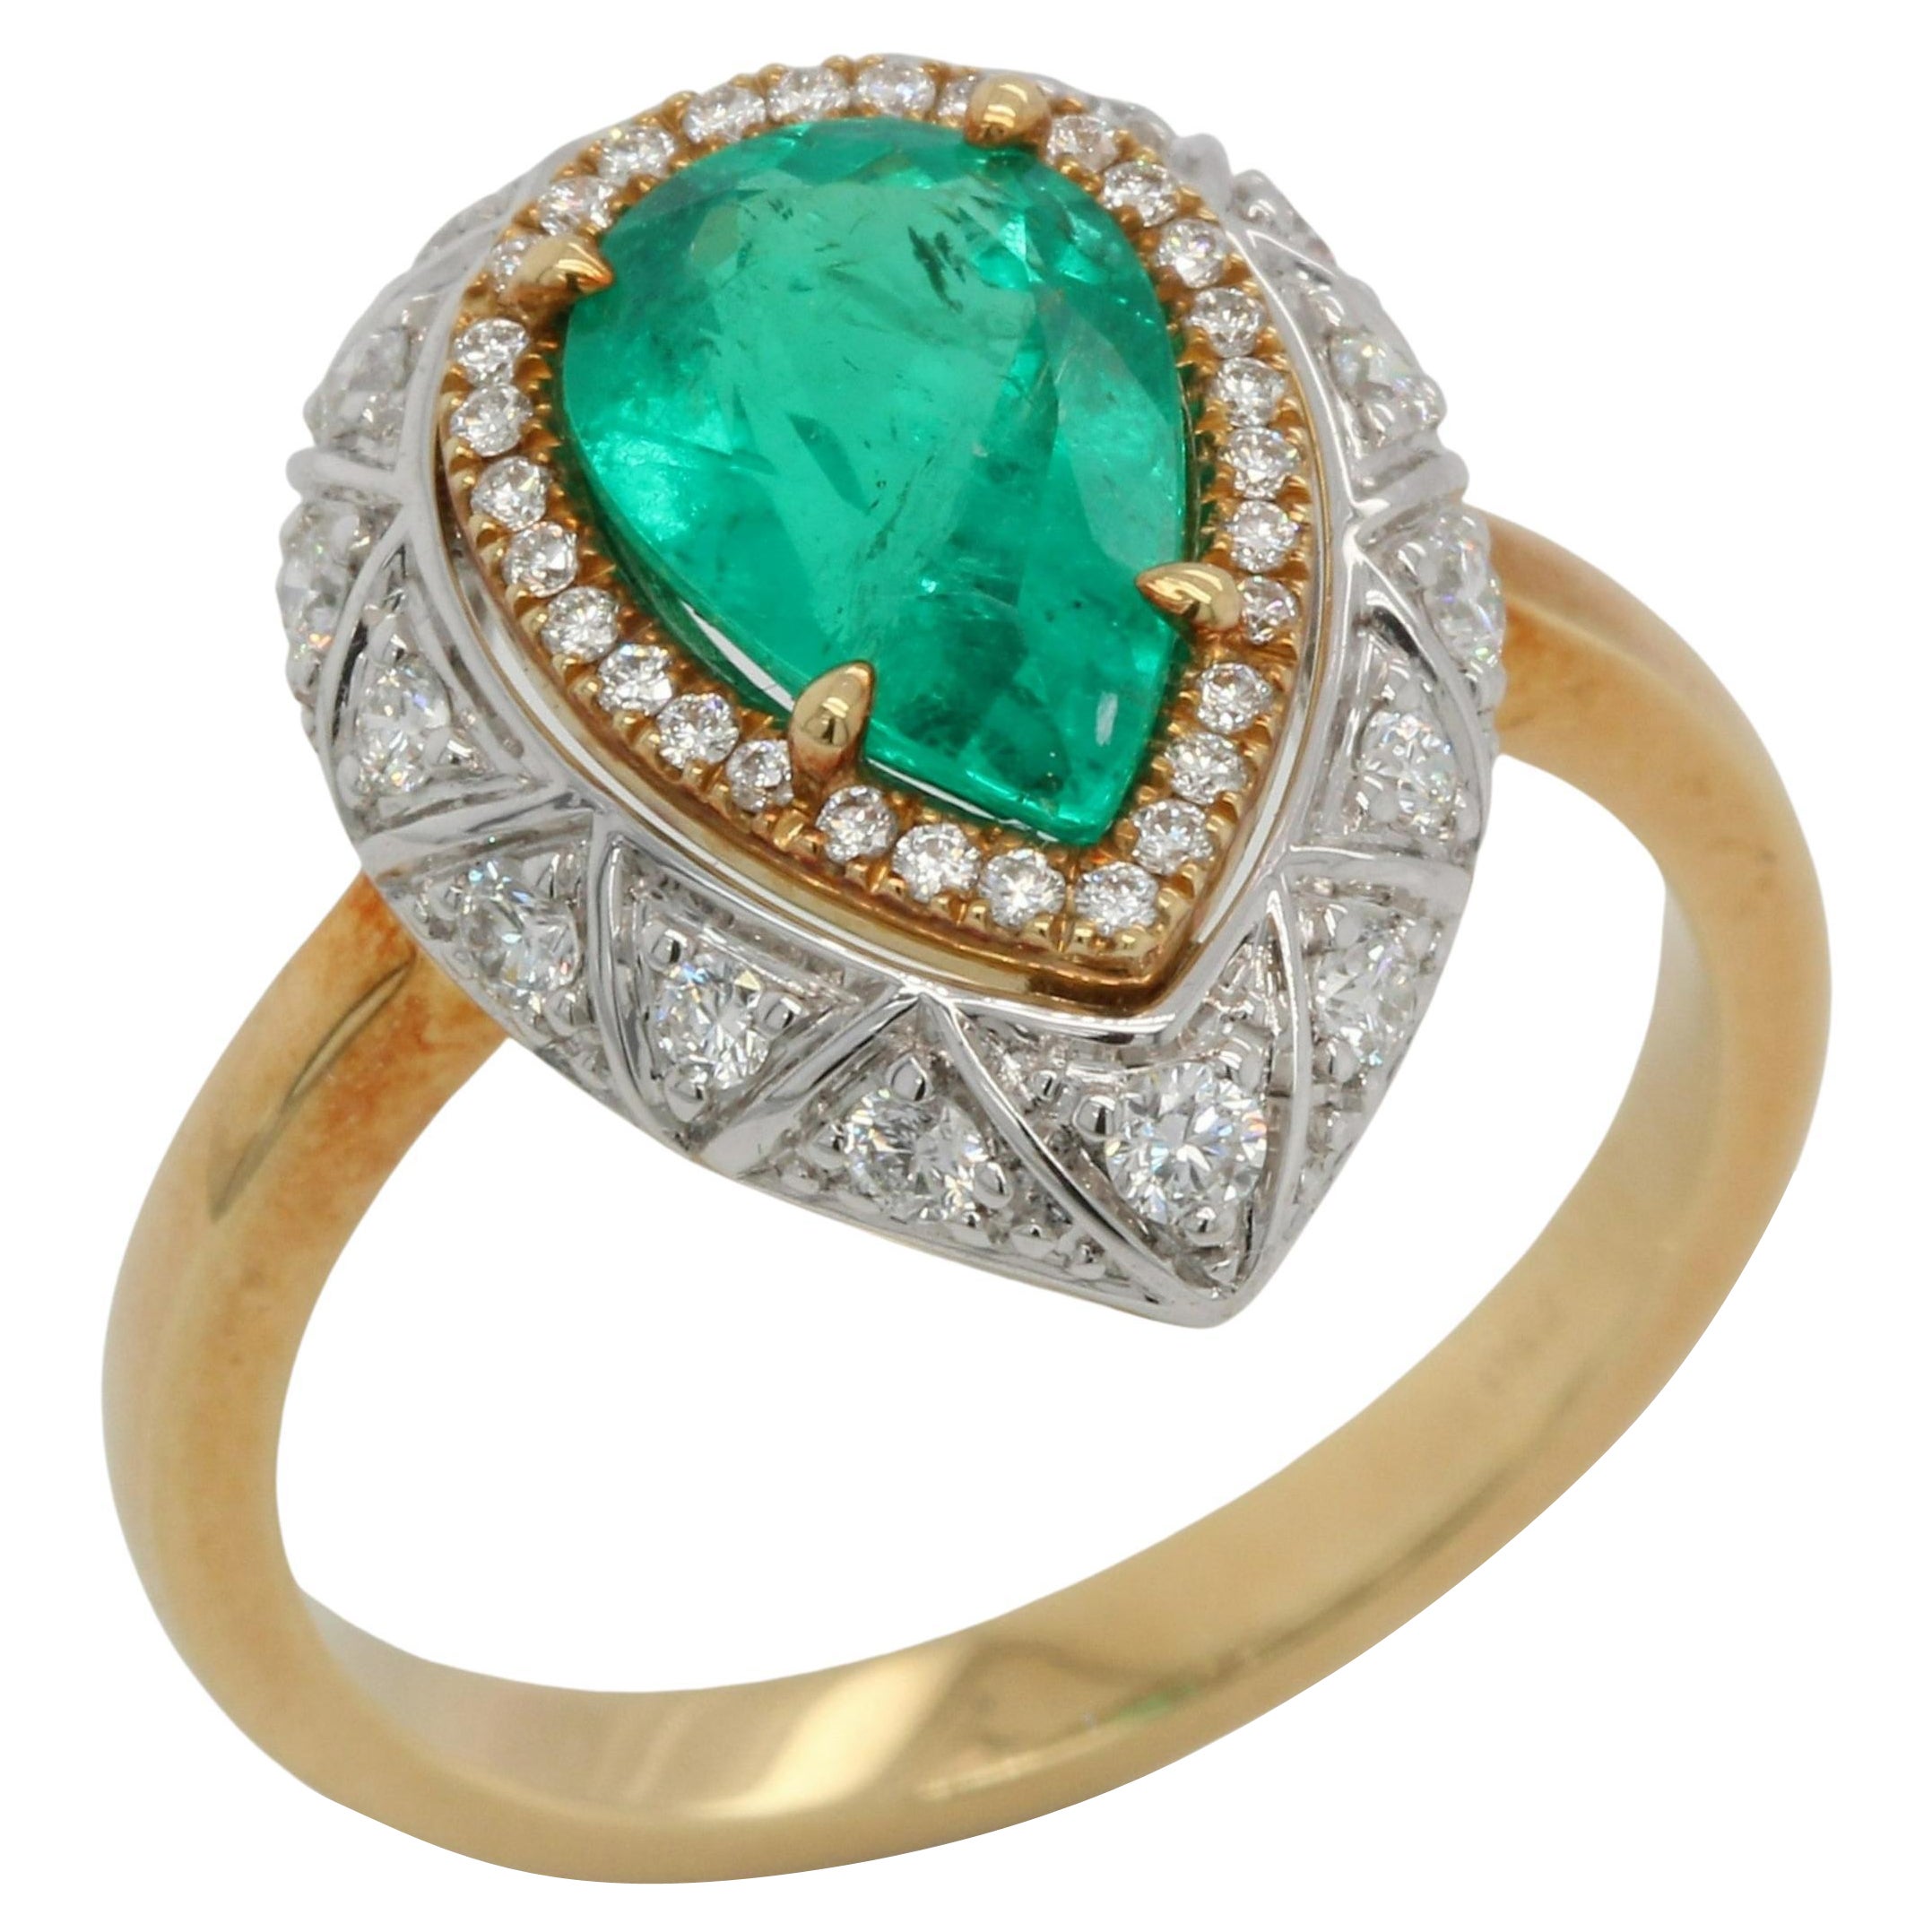 1.63 Carat Emerald And Diamond Wedding Ring In 18 Karat Gold For Sale